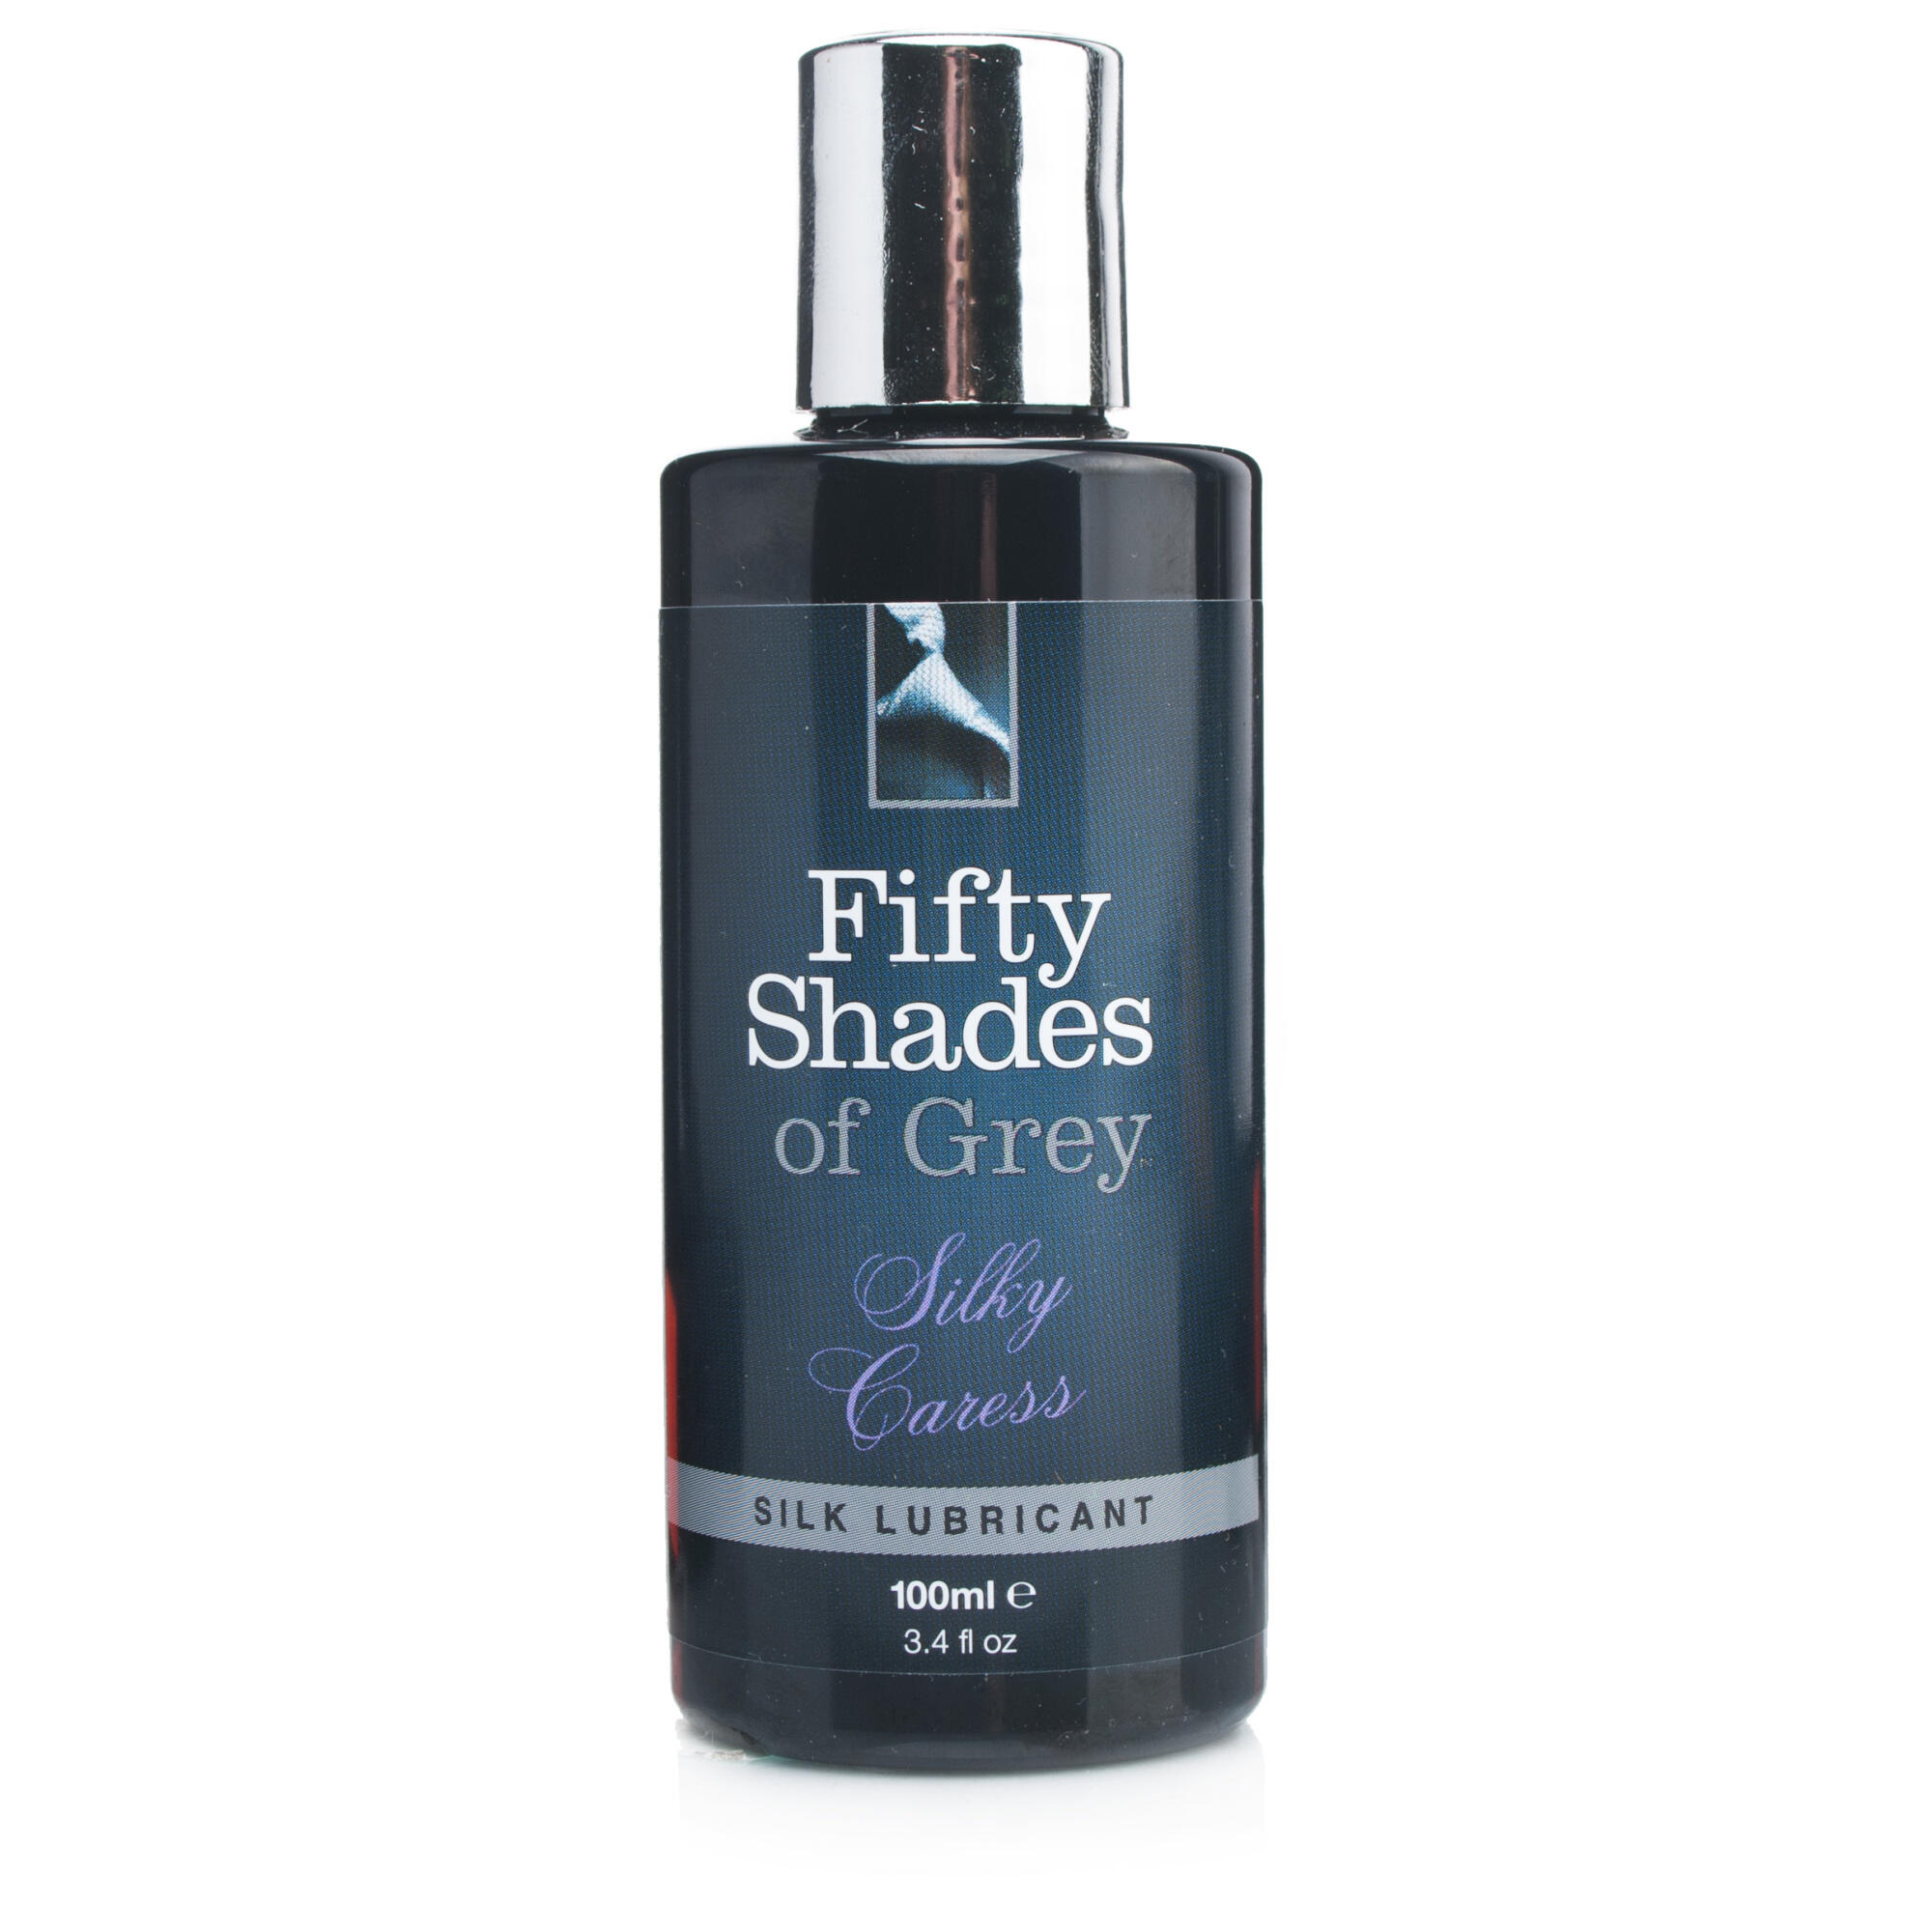 Fifty-Shades-of-Grey-Silky-Caress-Lubricant-100ml-189960.jpg